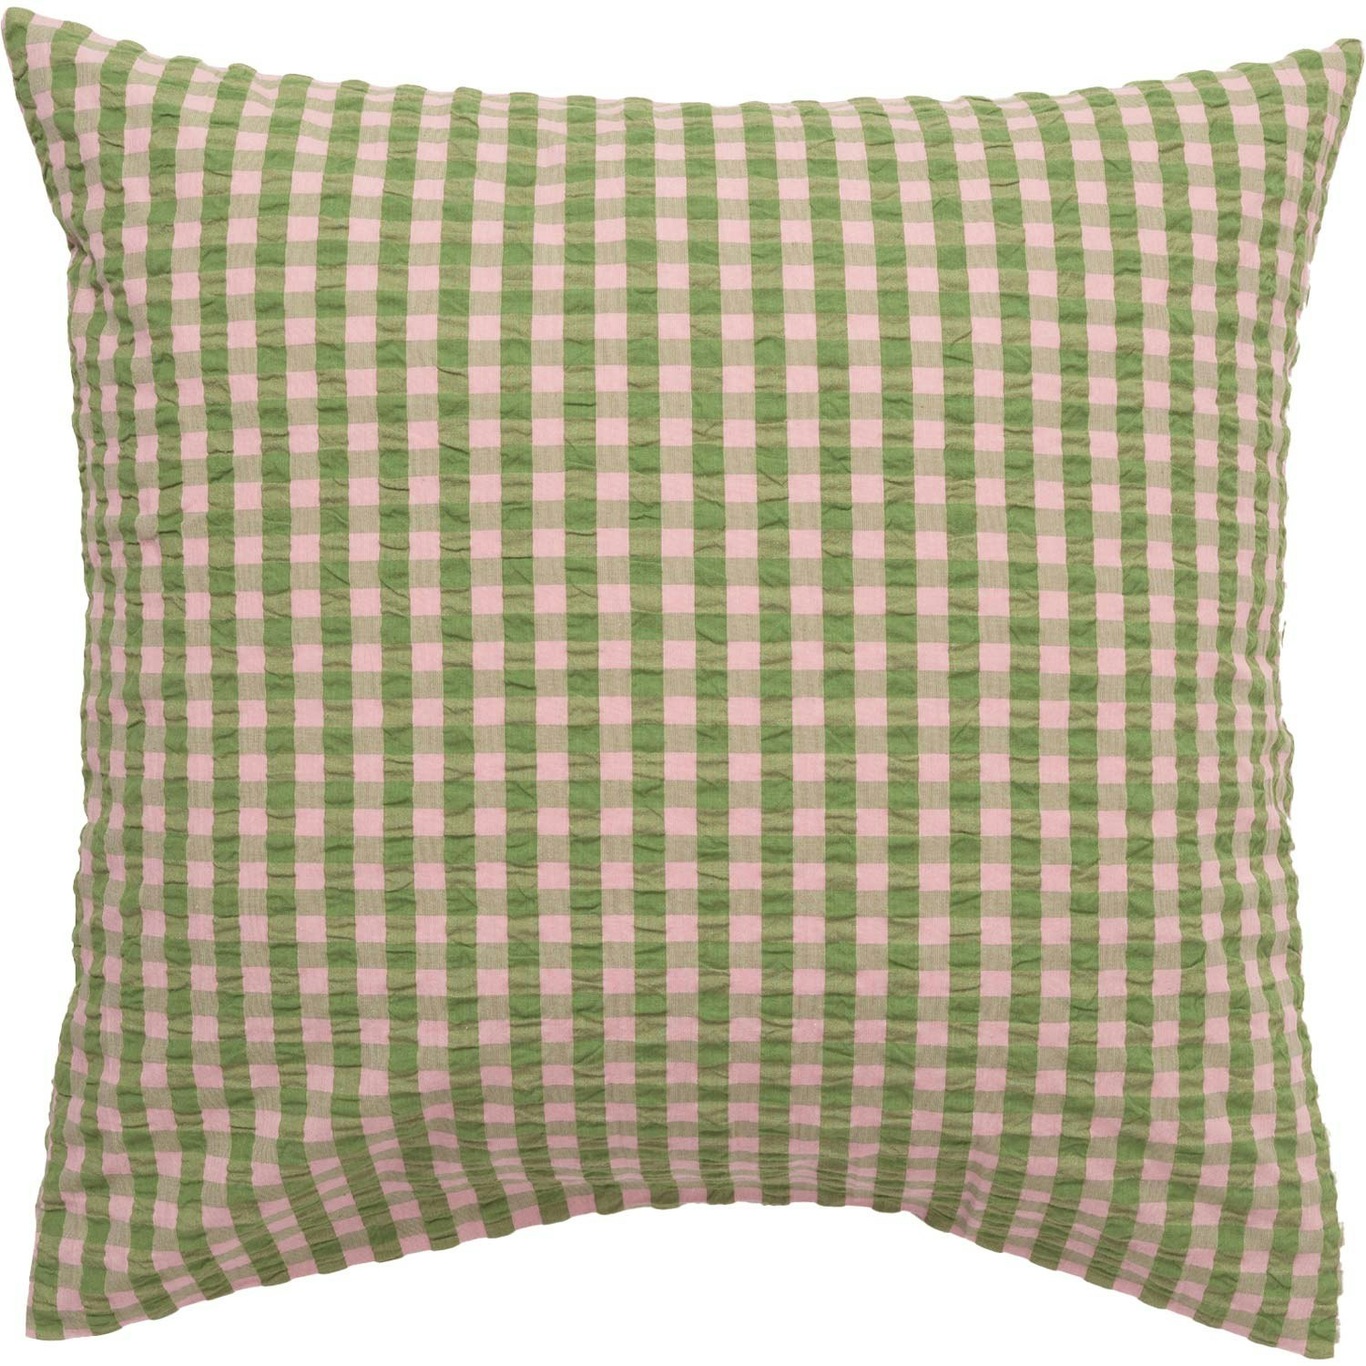 Bæk & Bølge Pillowcase 60x63 cm, Green/Pale Pink